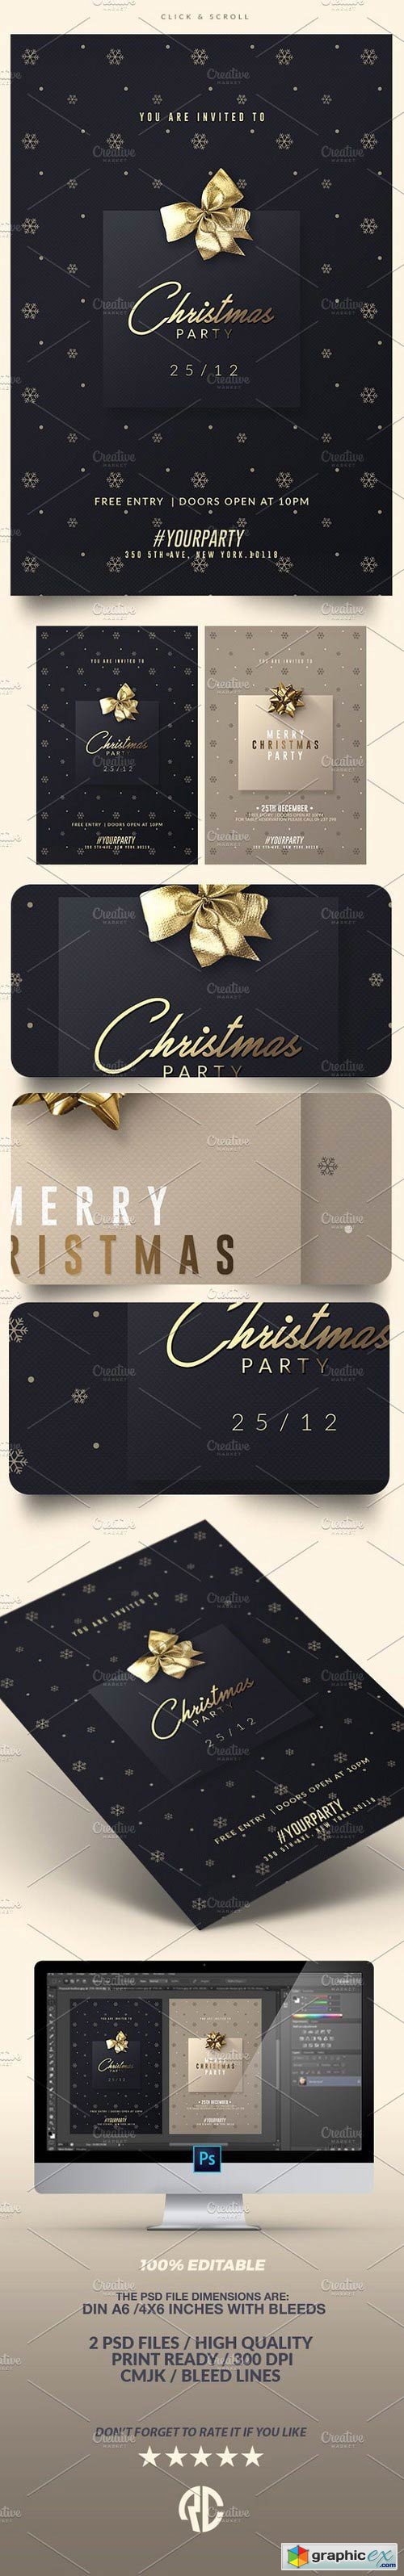 2 Classy Christmas | Psd Invitations